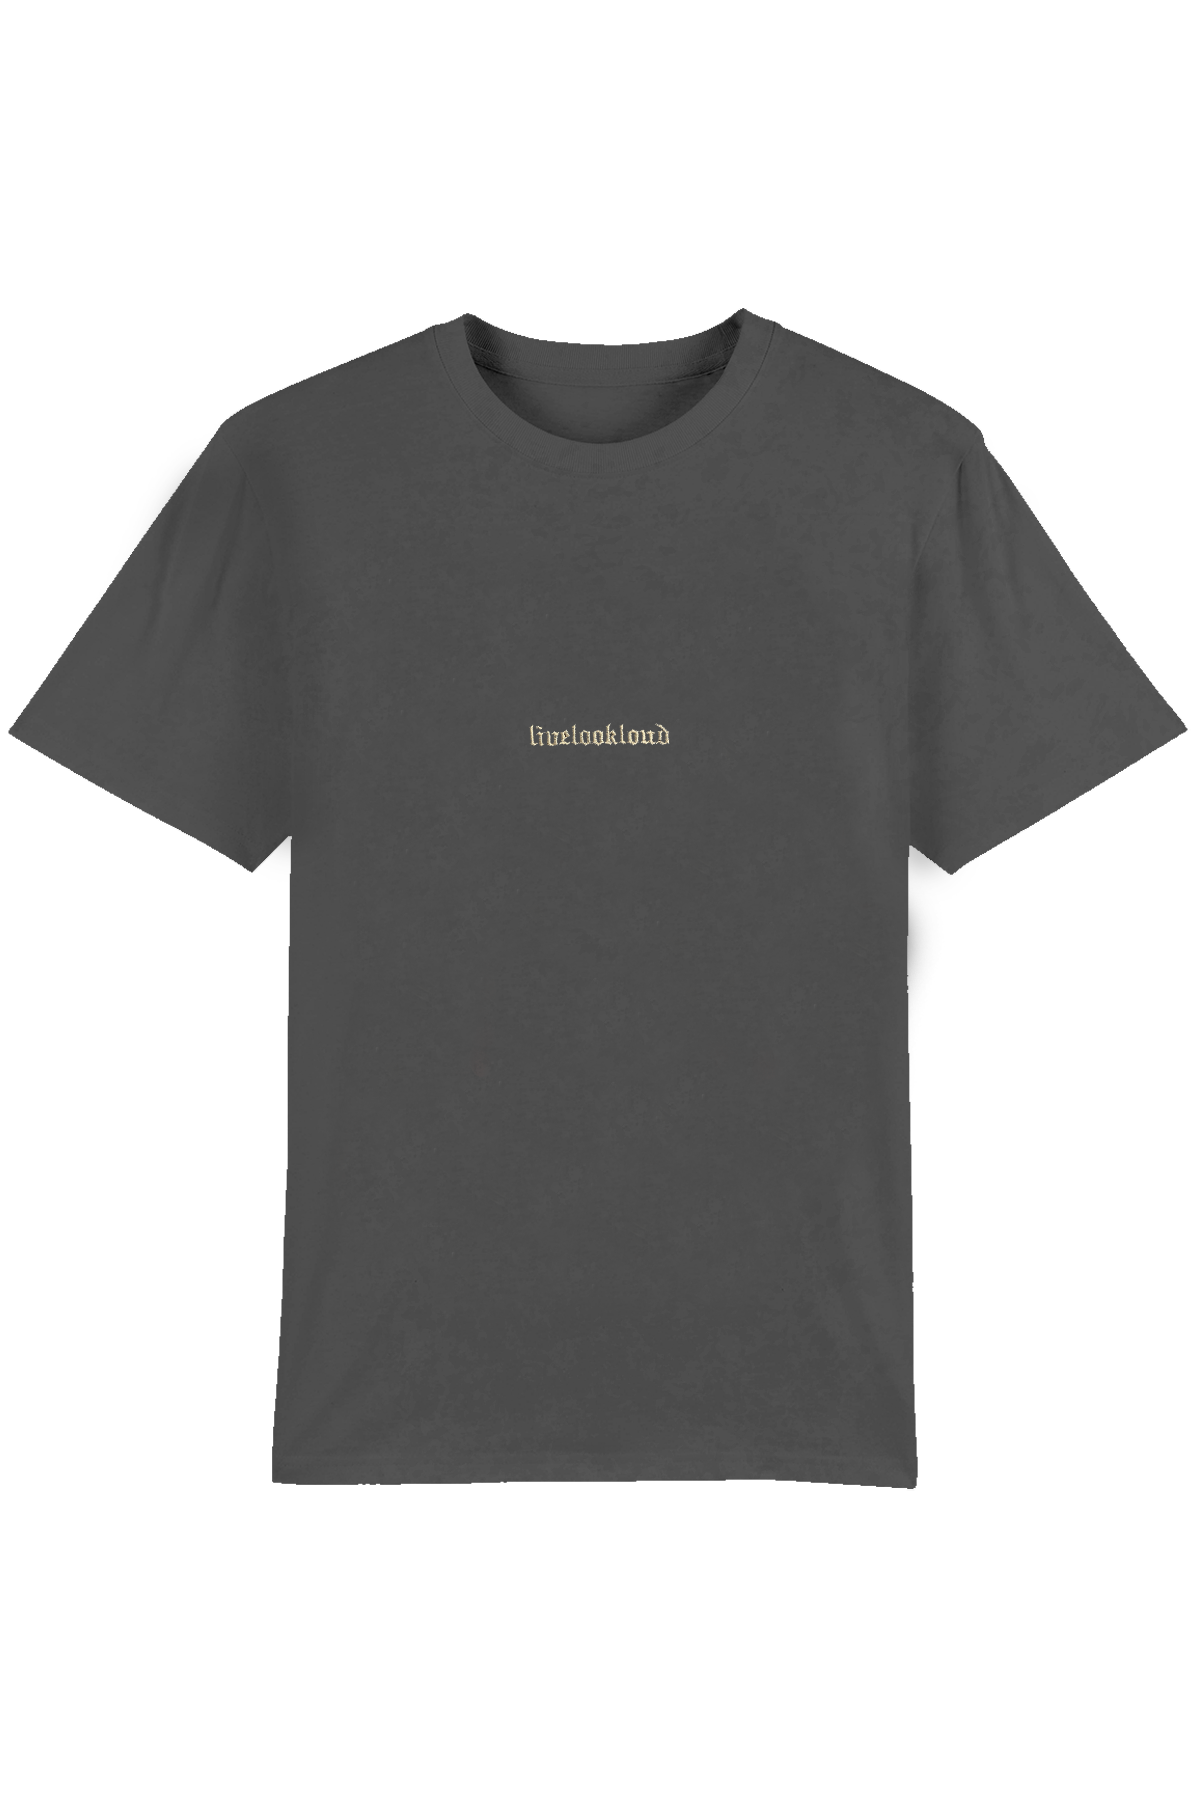 Loud Charcoal Placement T-Shirt - Live Look Loud